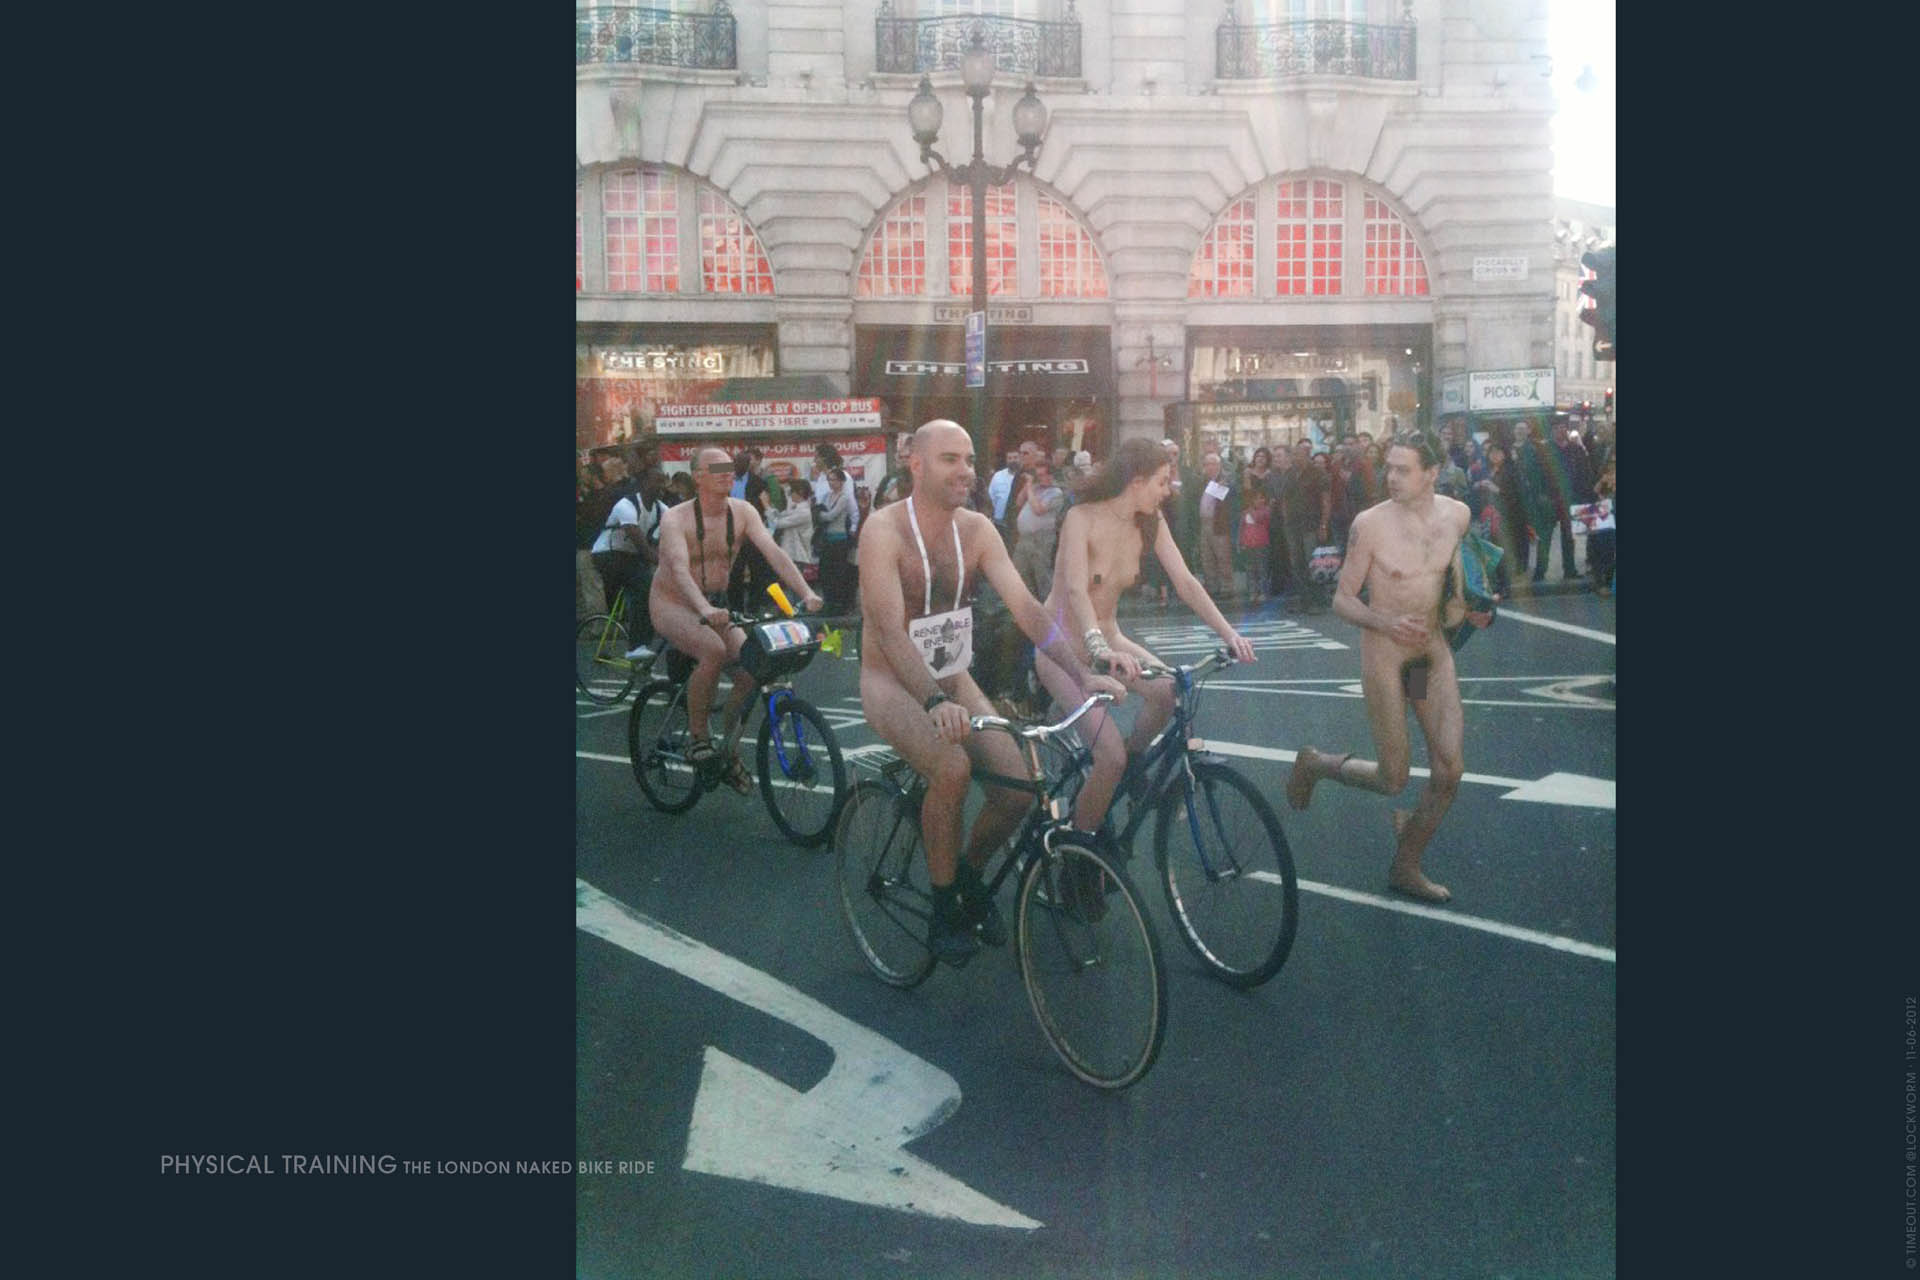 Physical Training, the London Naked Bike Ride